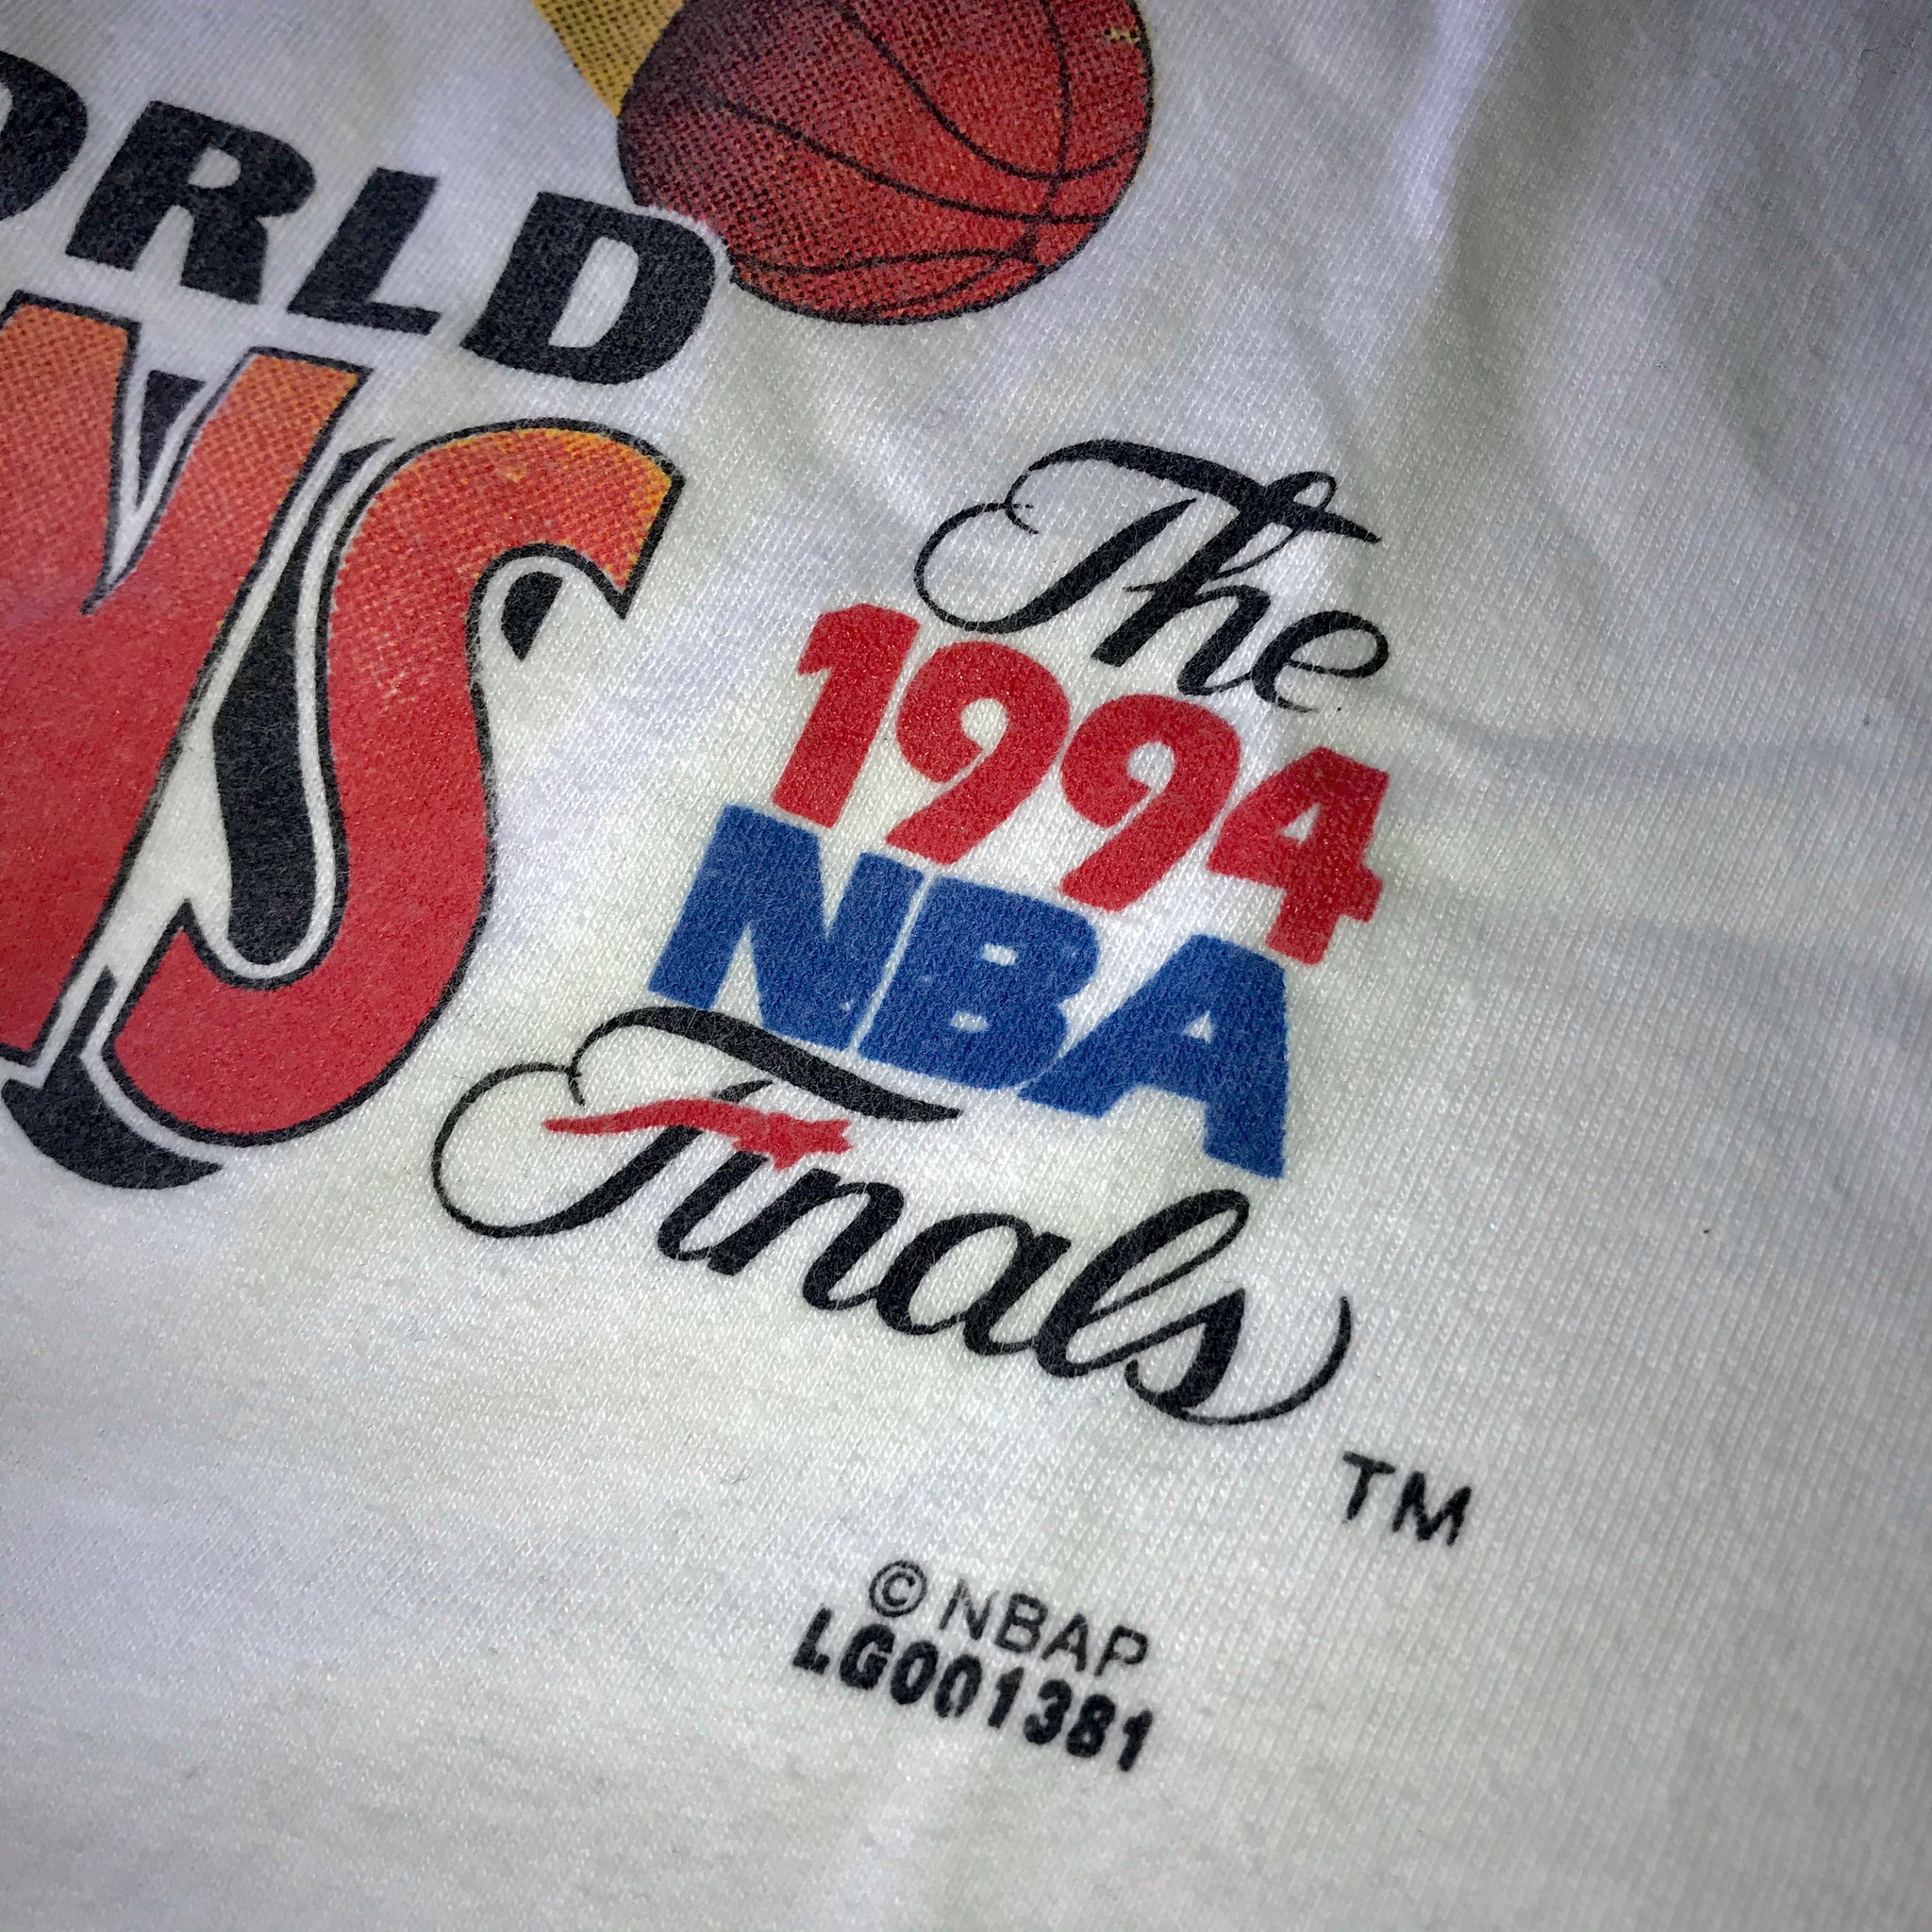 1994 Houston Rockets 'Clutch City' NBA Champions T-Shirt - 5 Star Vintage